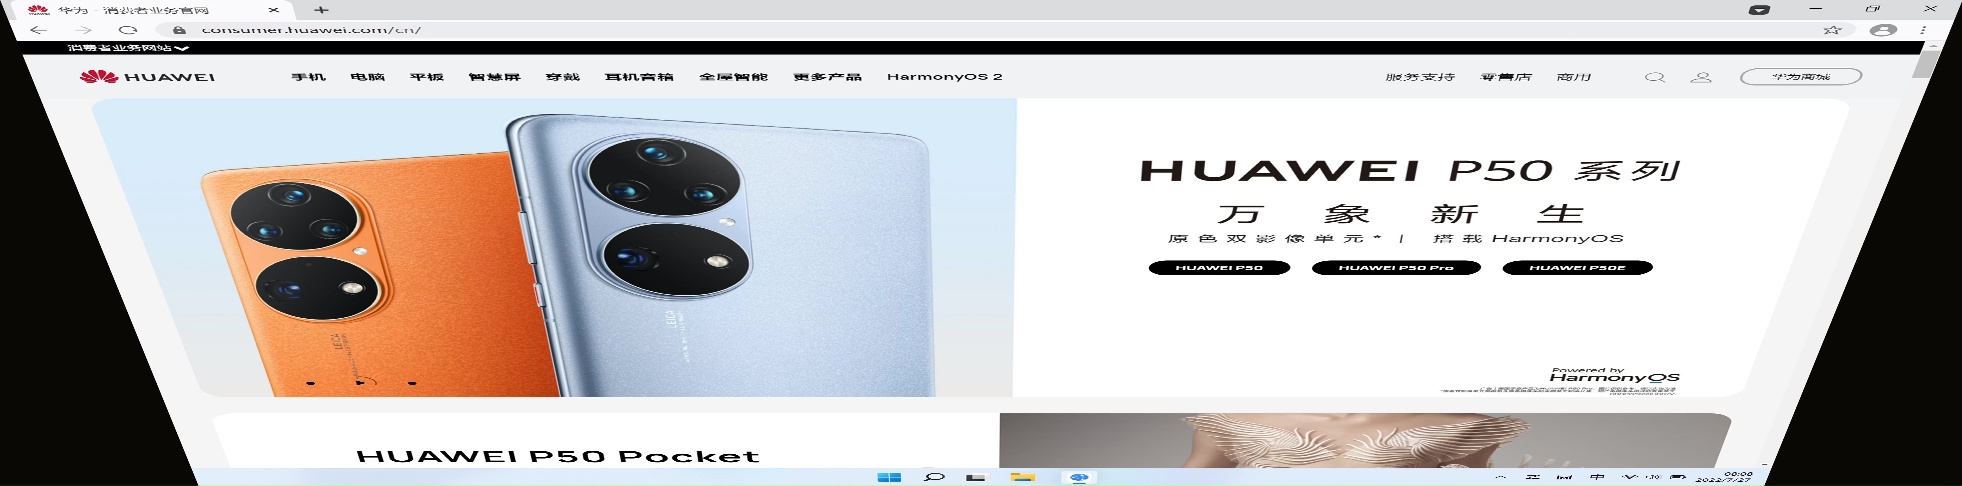 HUAWEI MateBook X Pro 触控板